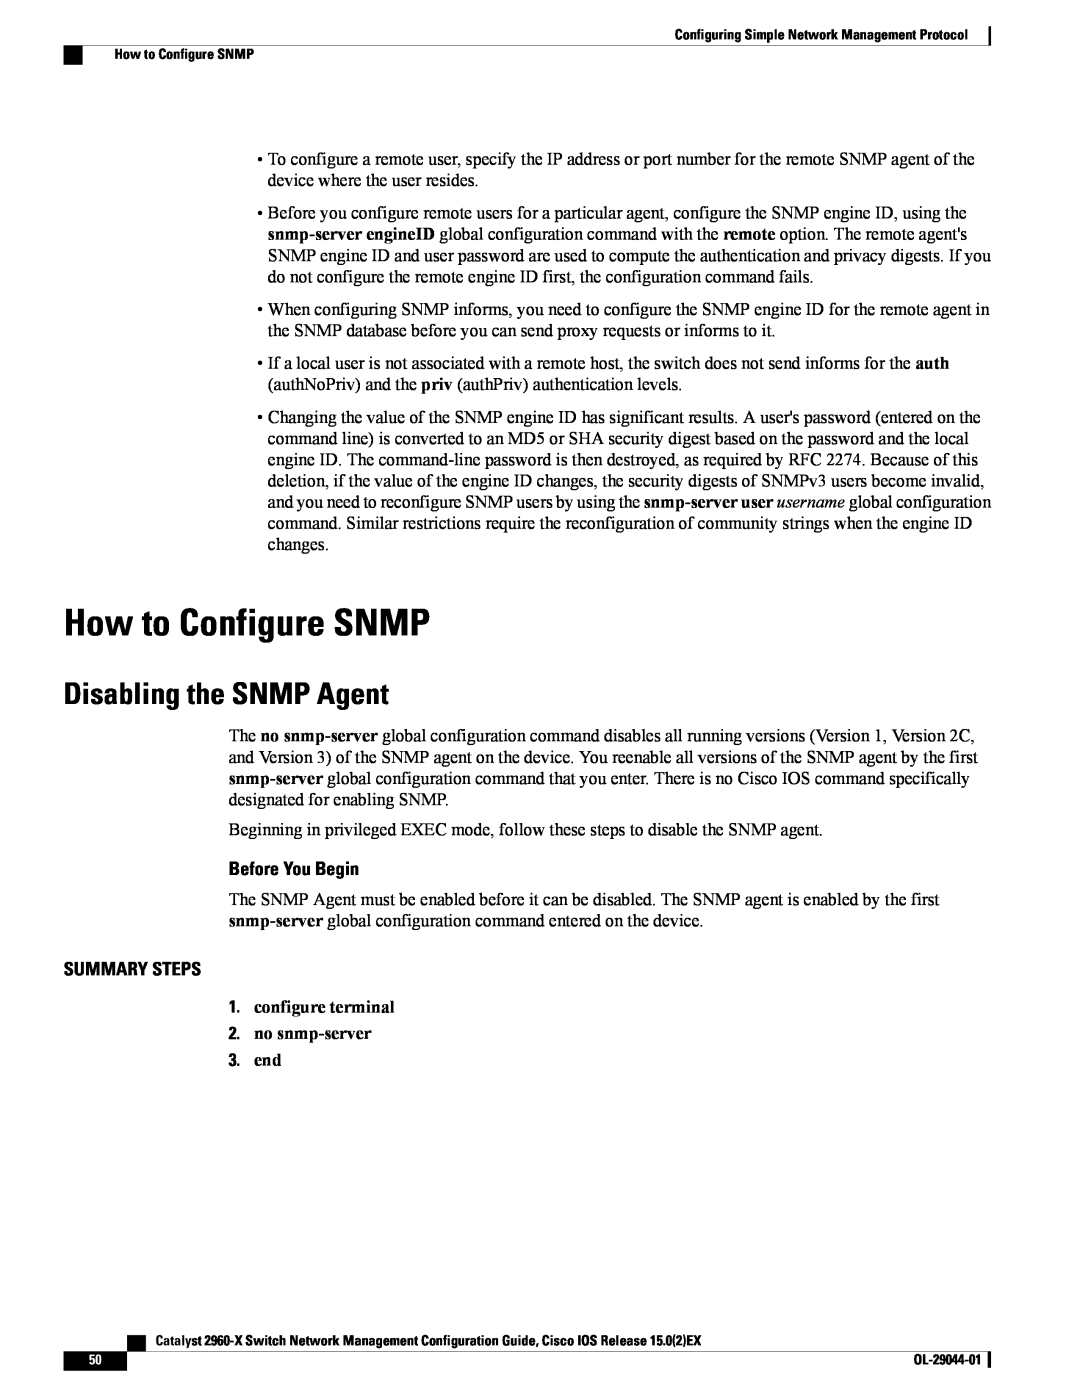 Cisco Systems WSC2960X24TSL How to Configure SNMP, Disabling the SNMP Agent, configure terminal 2. no snmp-server 3. end 